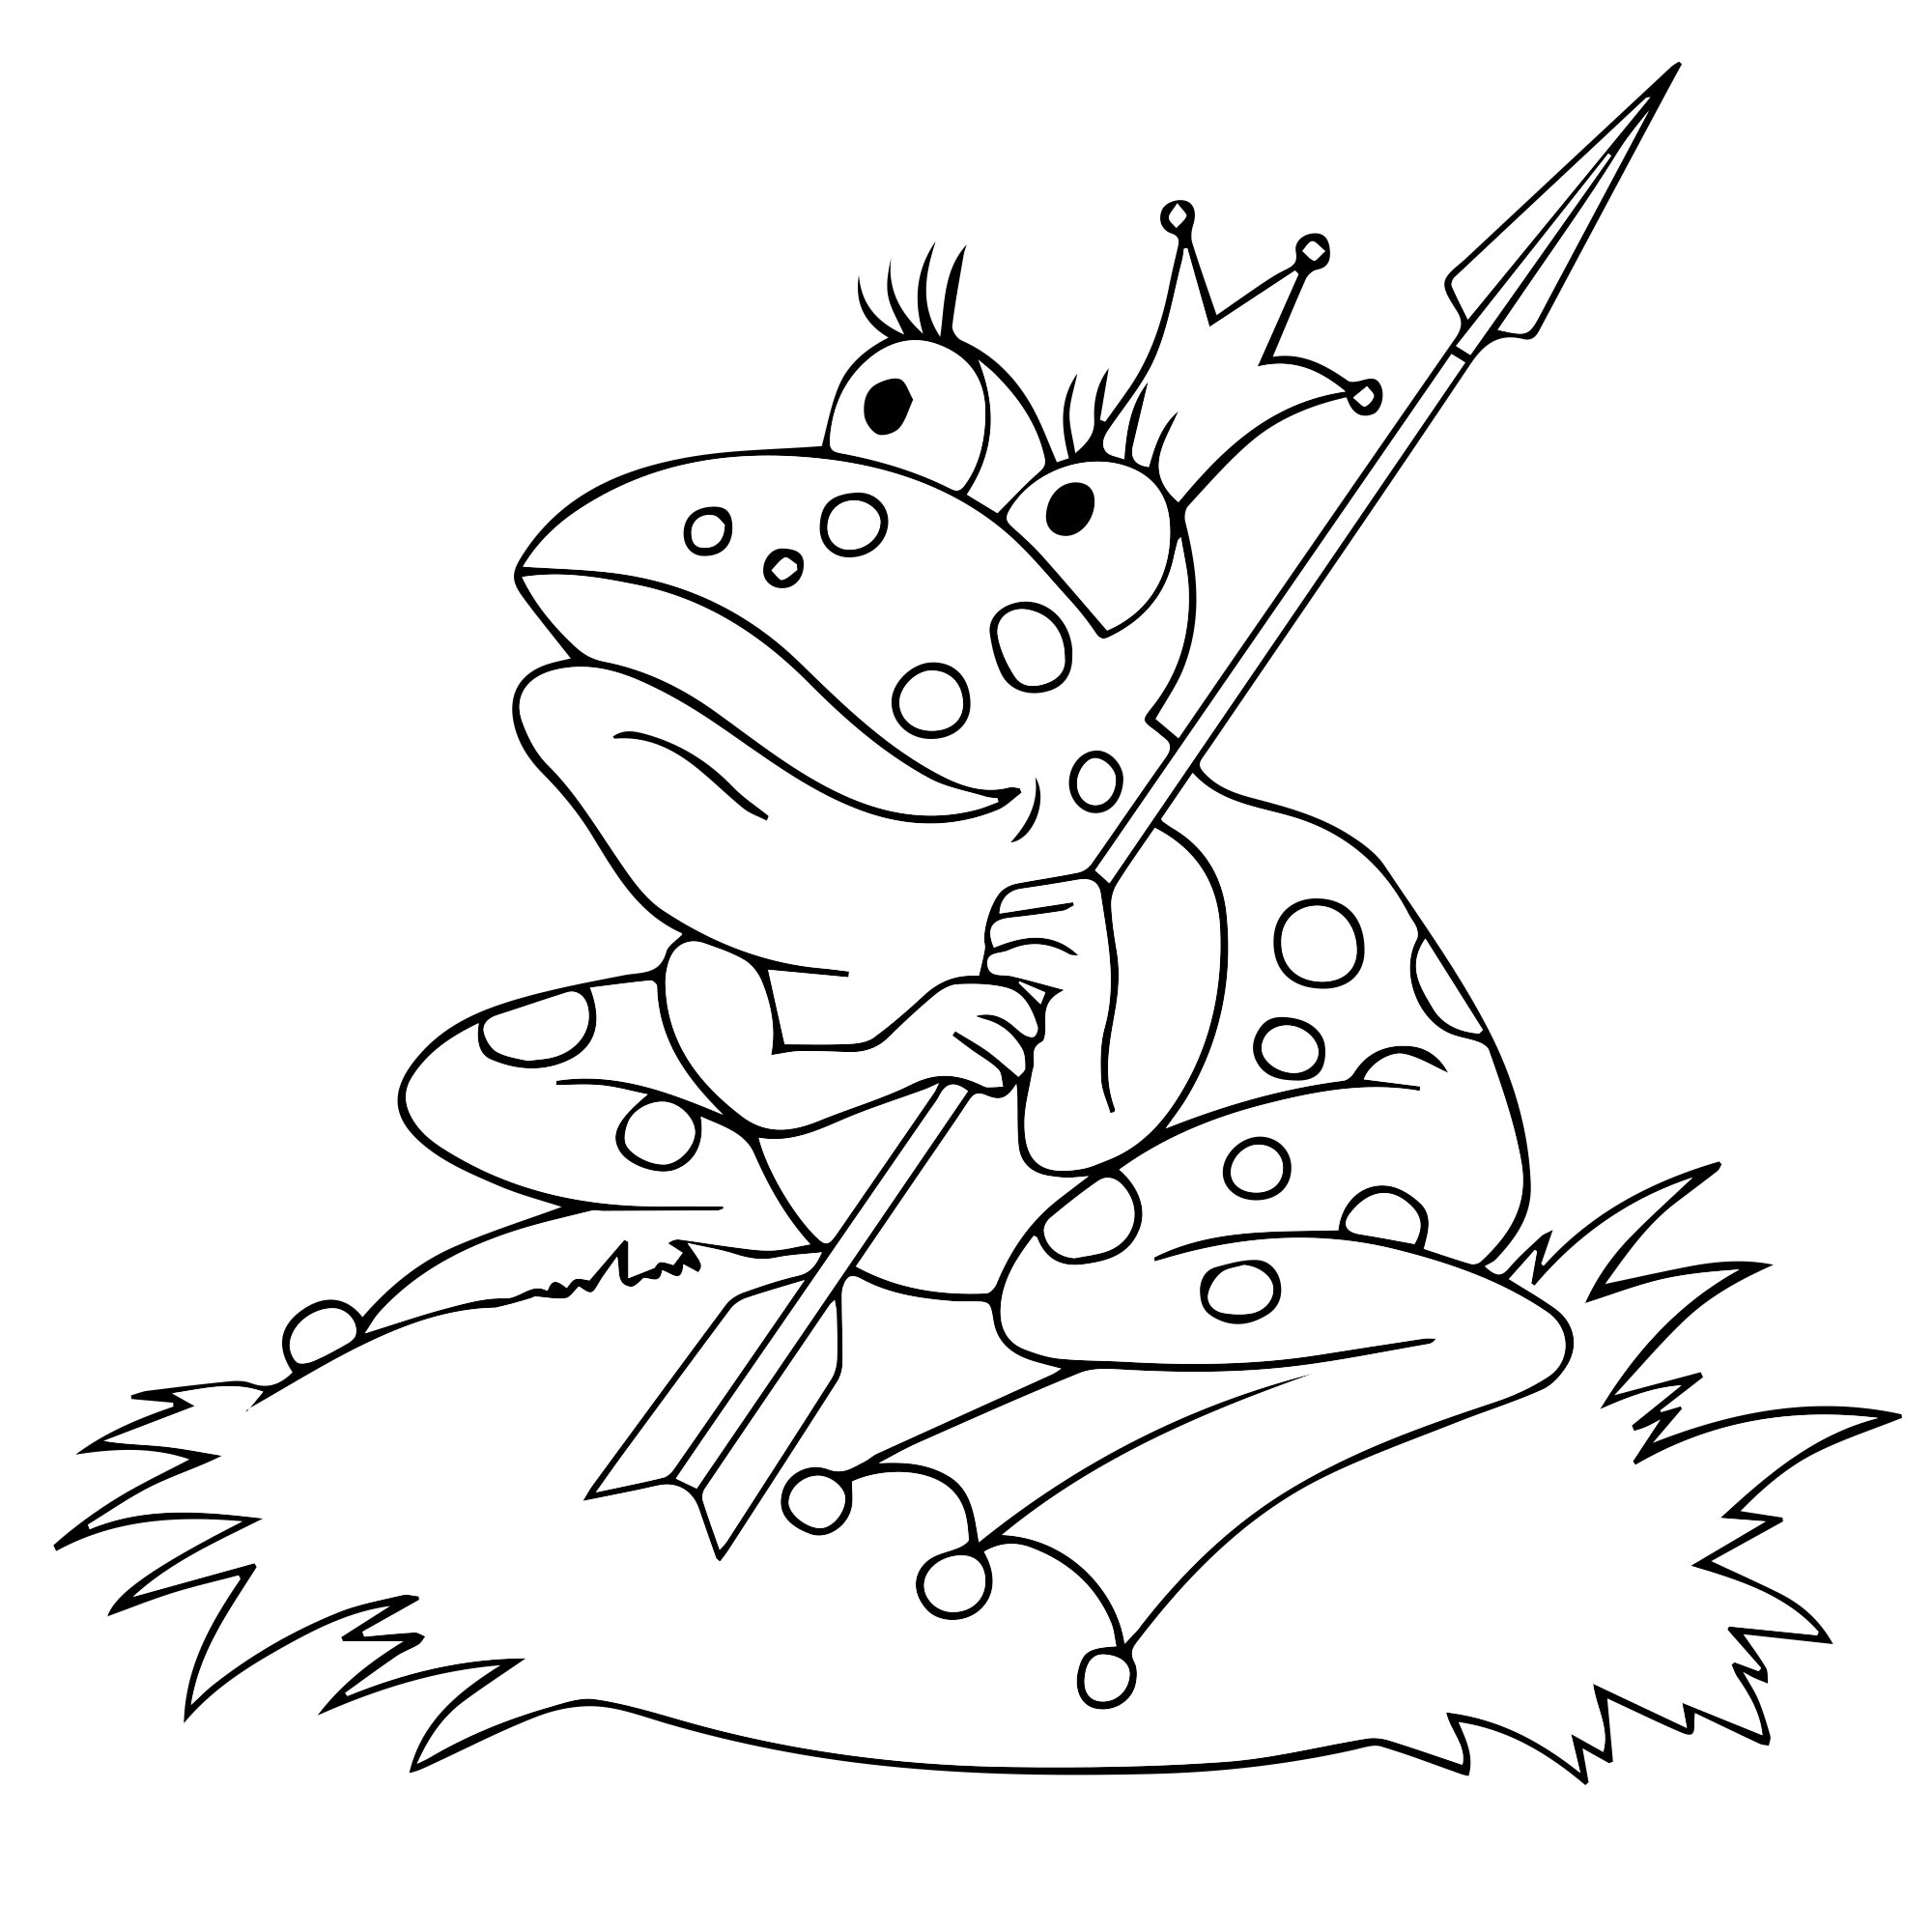 Царевна-лягушка раскраска для детей